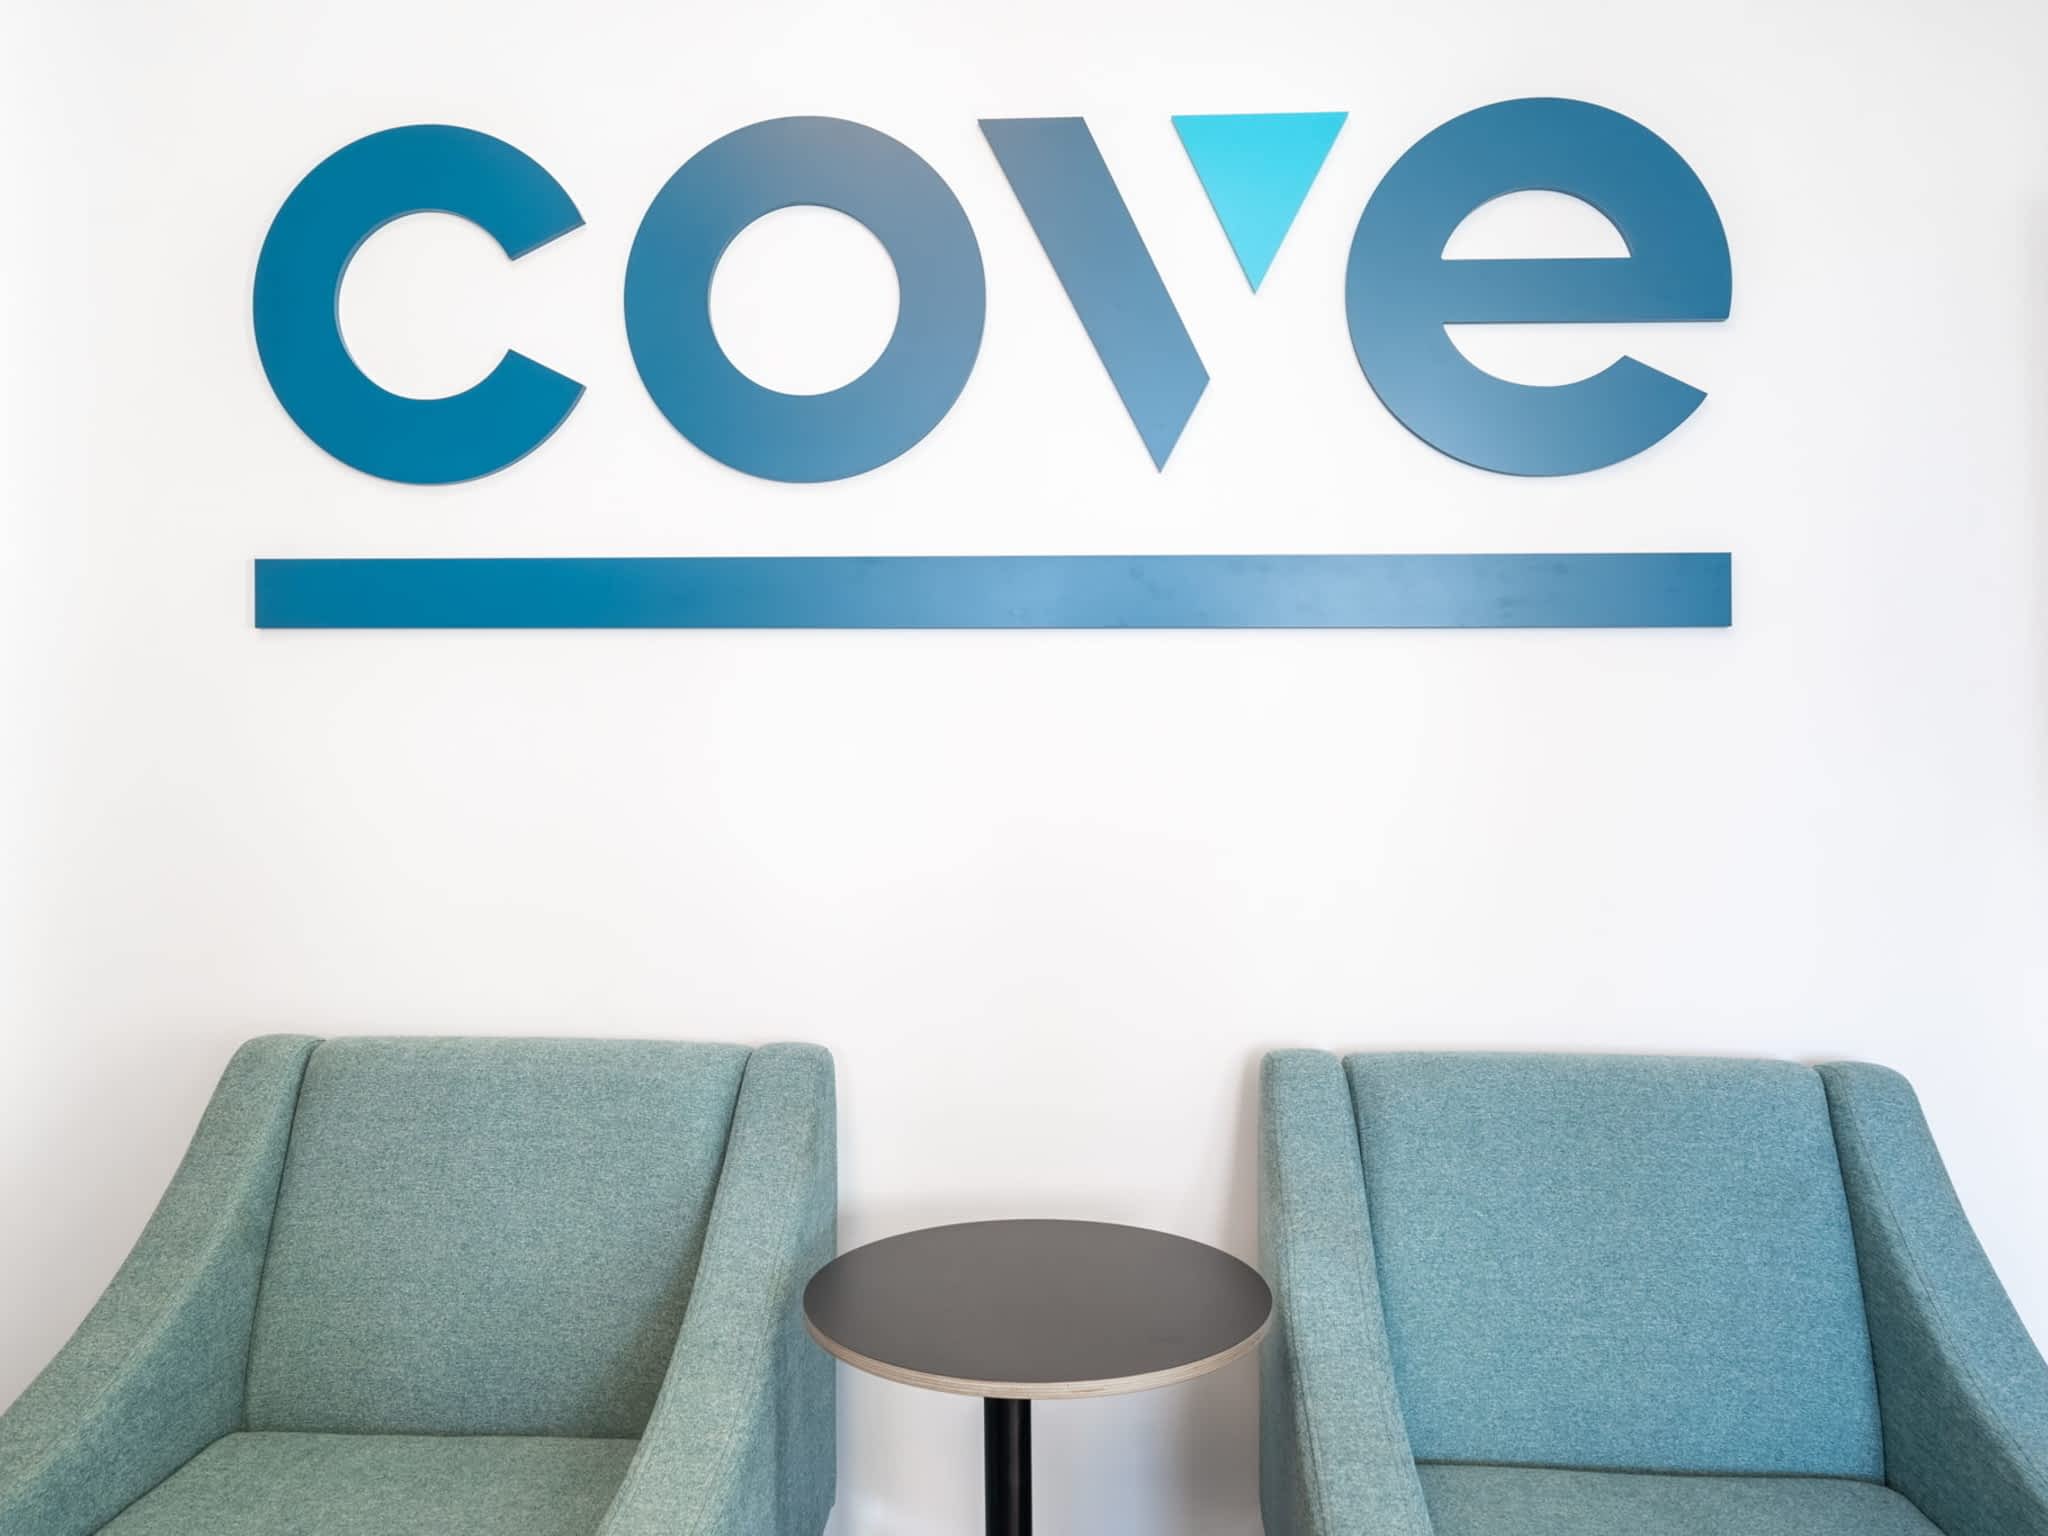 photo Cove Real Estate Brokerage Ltd.